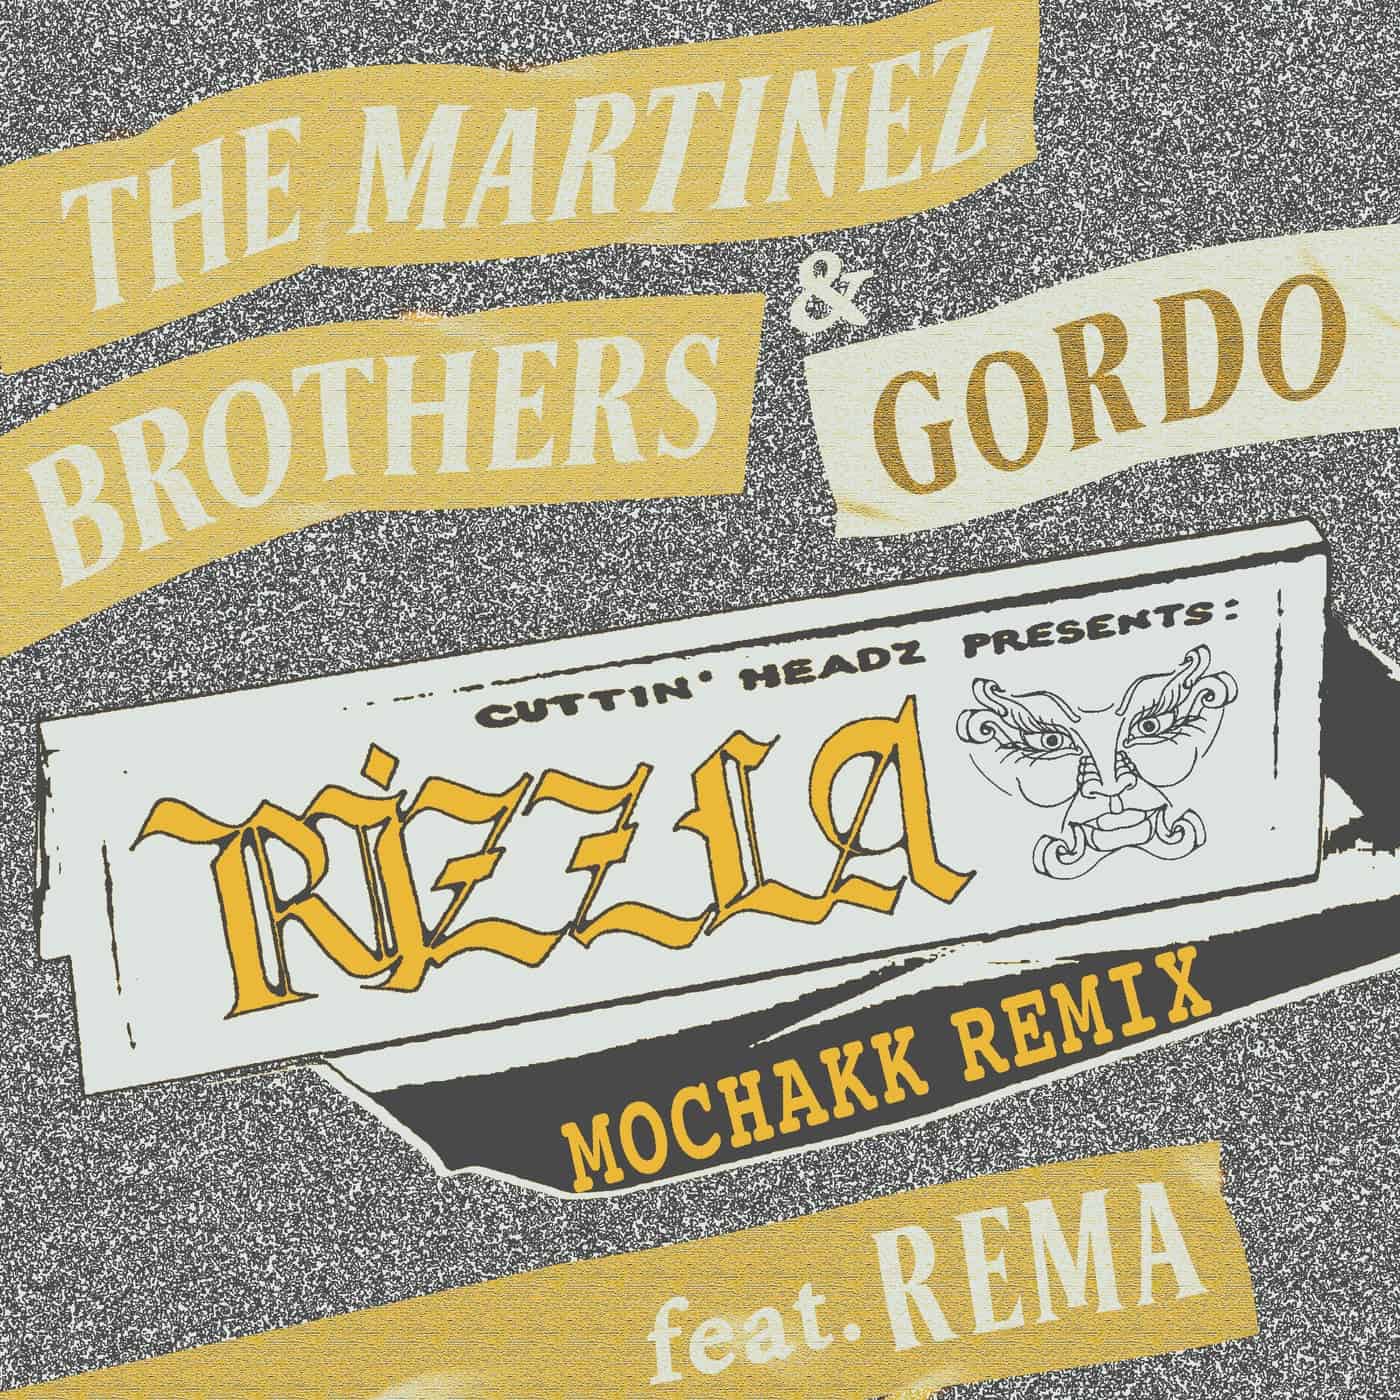 Download The Martinez Brothers, Gordo, Rema - Rizzla feat Rema - Mochakk Remix on Electrobuzz